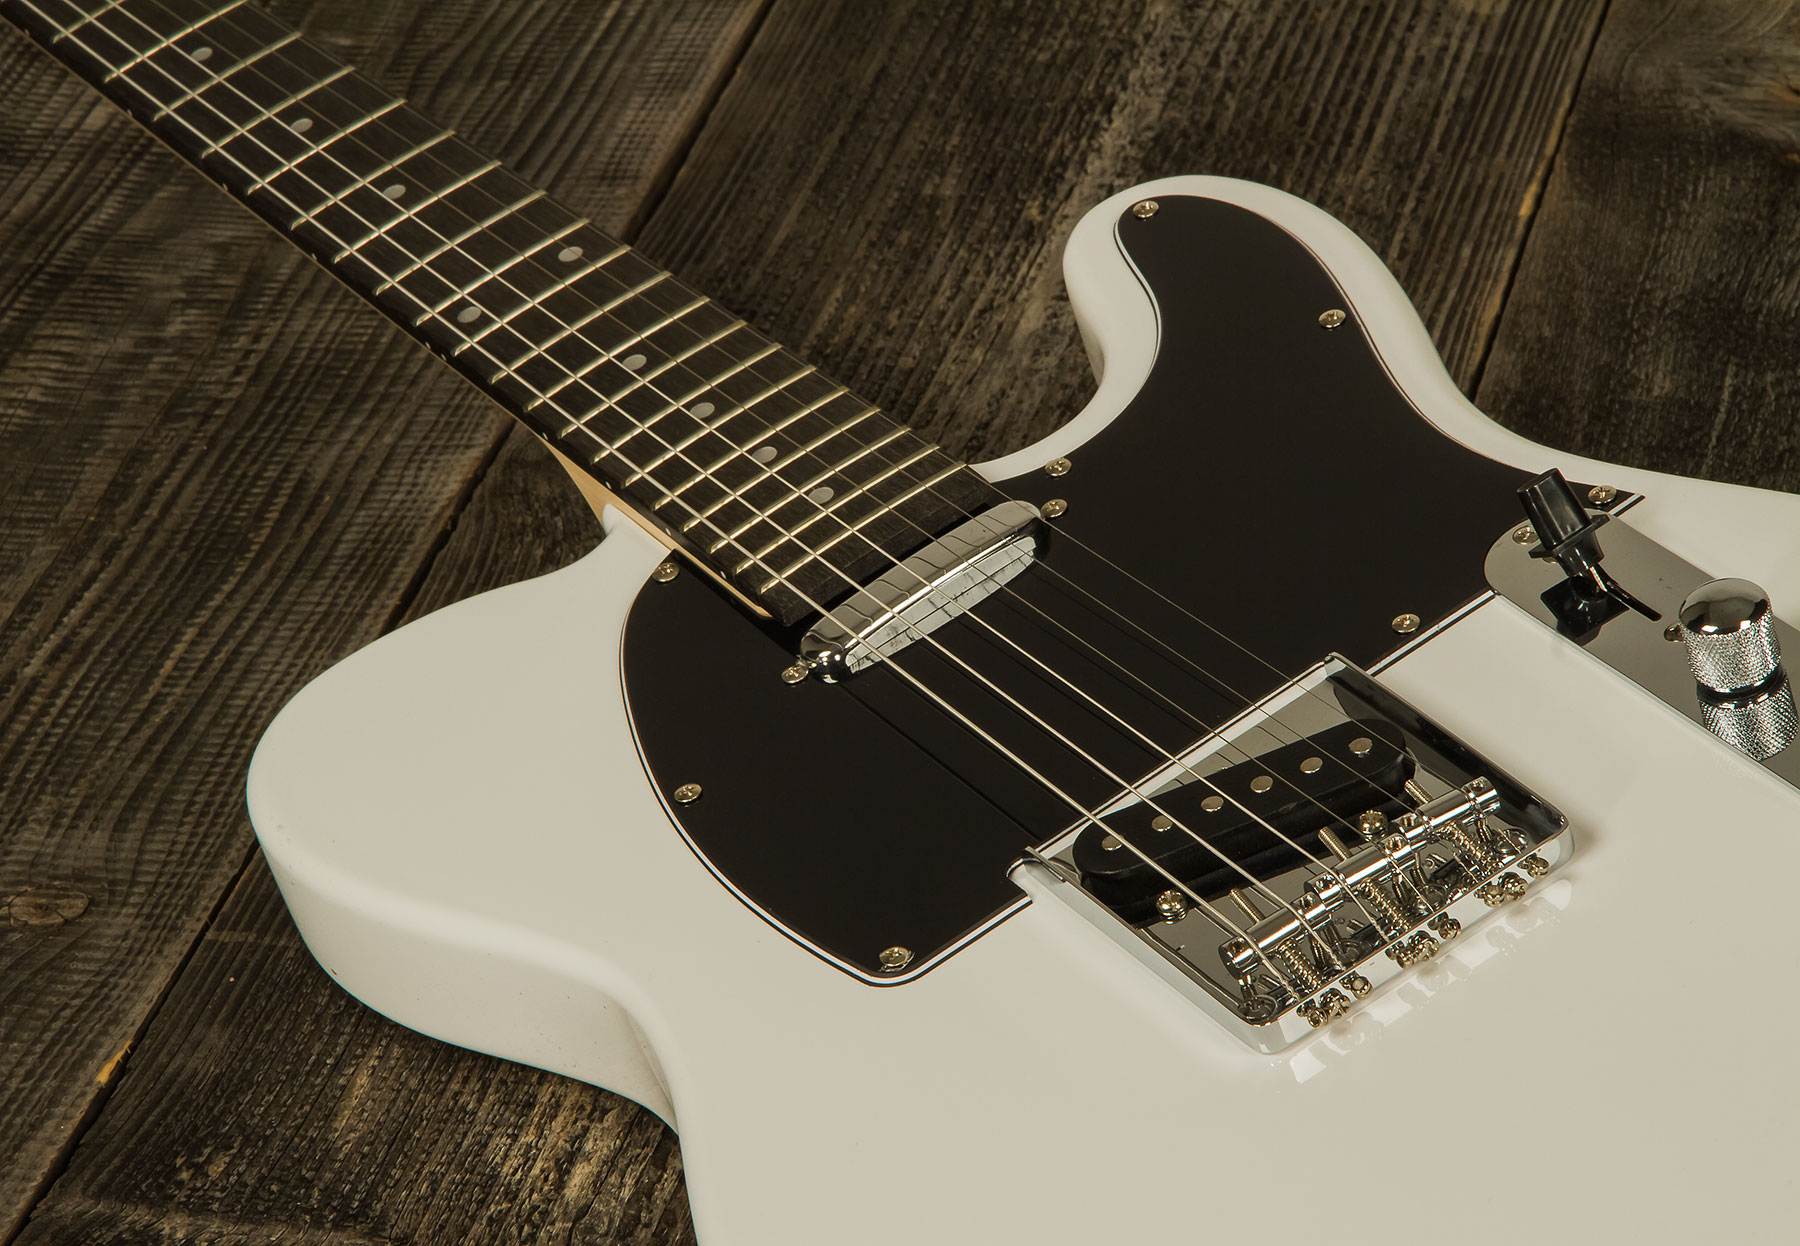 Eastone Tl70 +marshall Mg10g Combo 10 W +housse +courroie +cable +mediators - Olympic White - Elektrische gitaar set - Variation 4